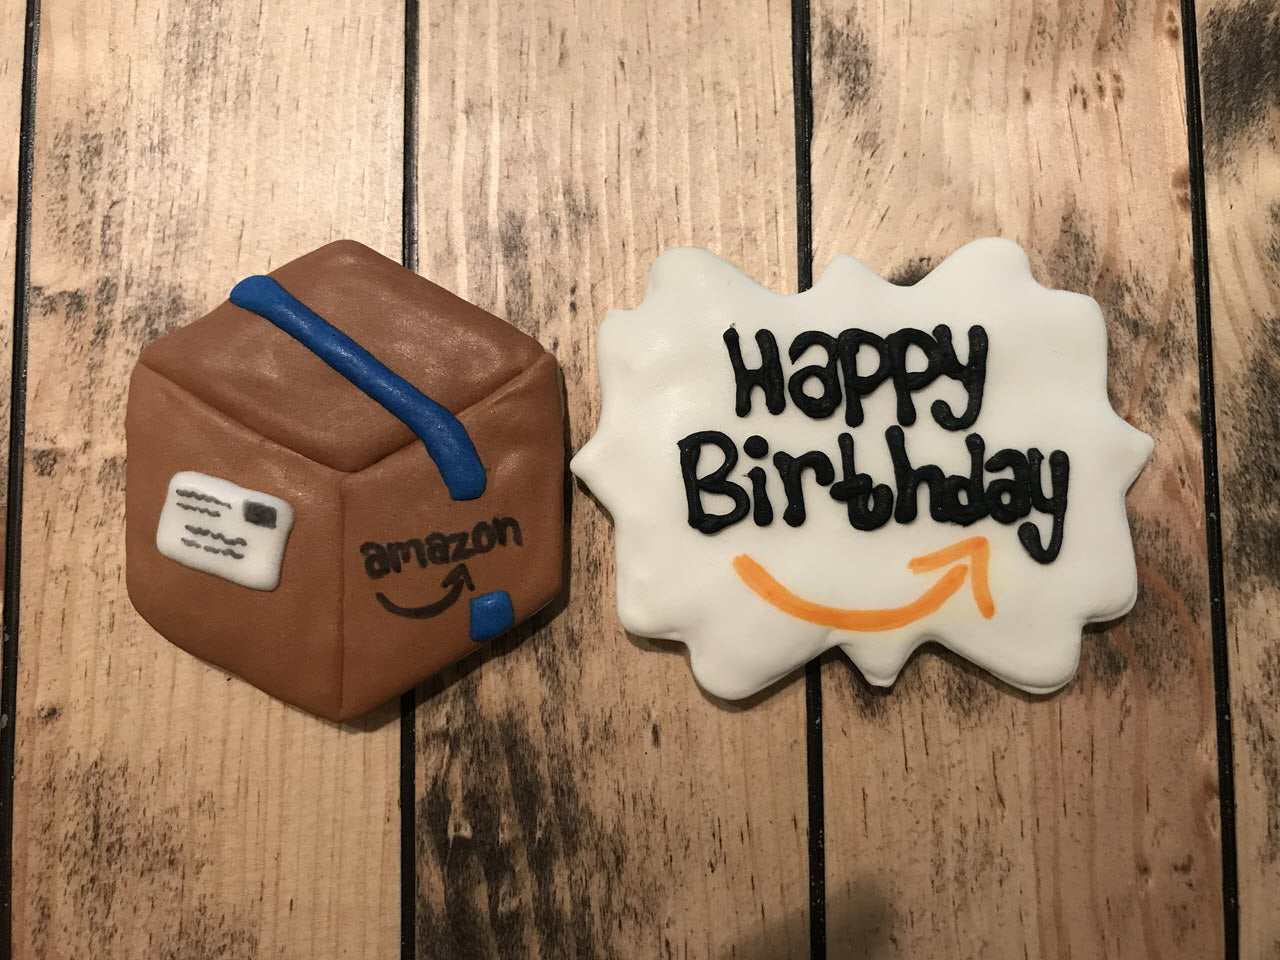 Amazon Package Cookies Set